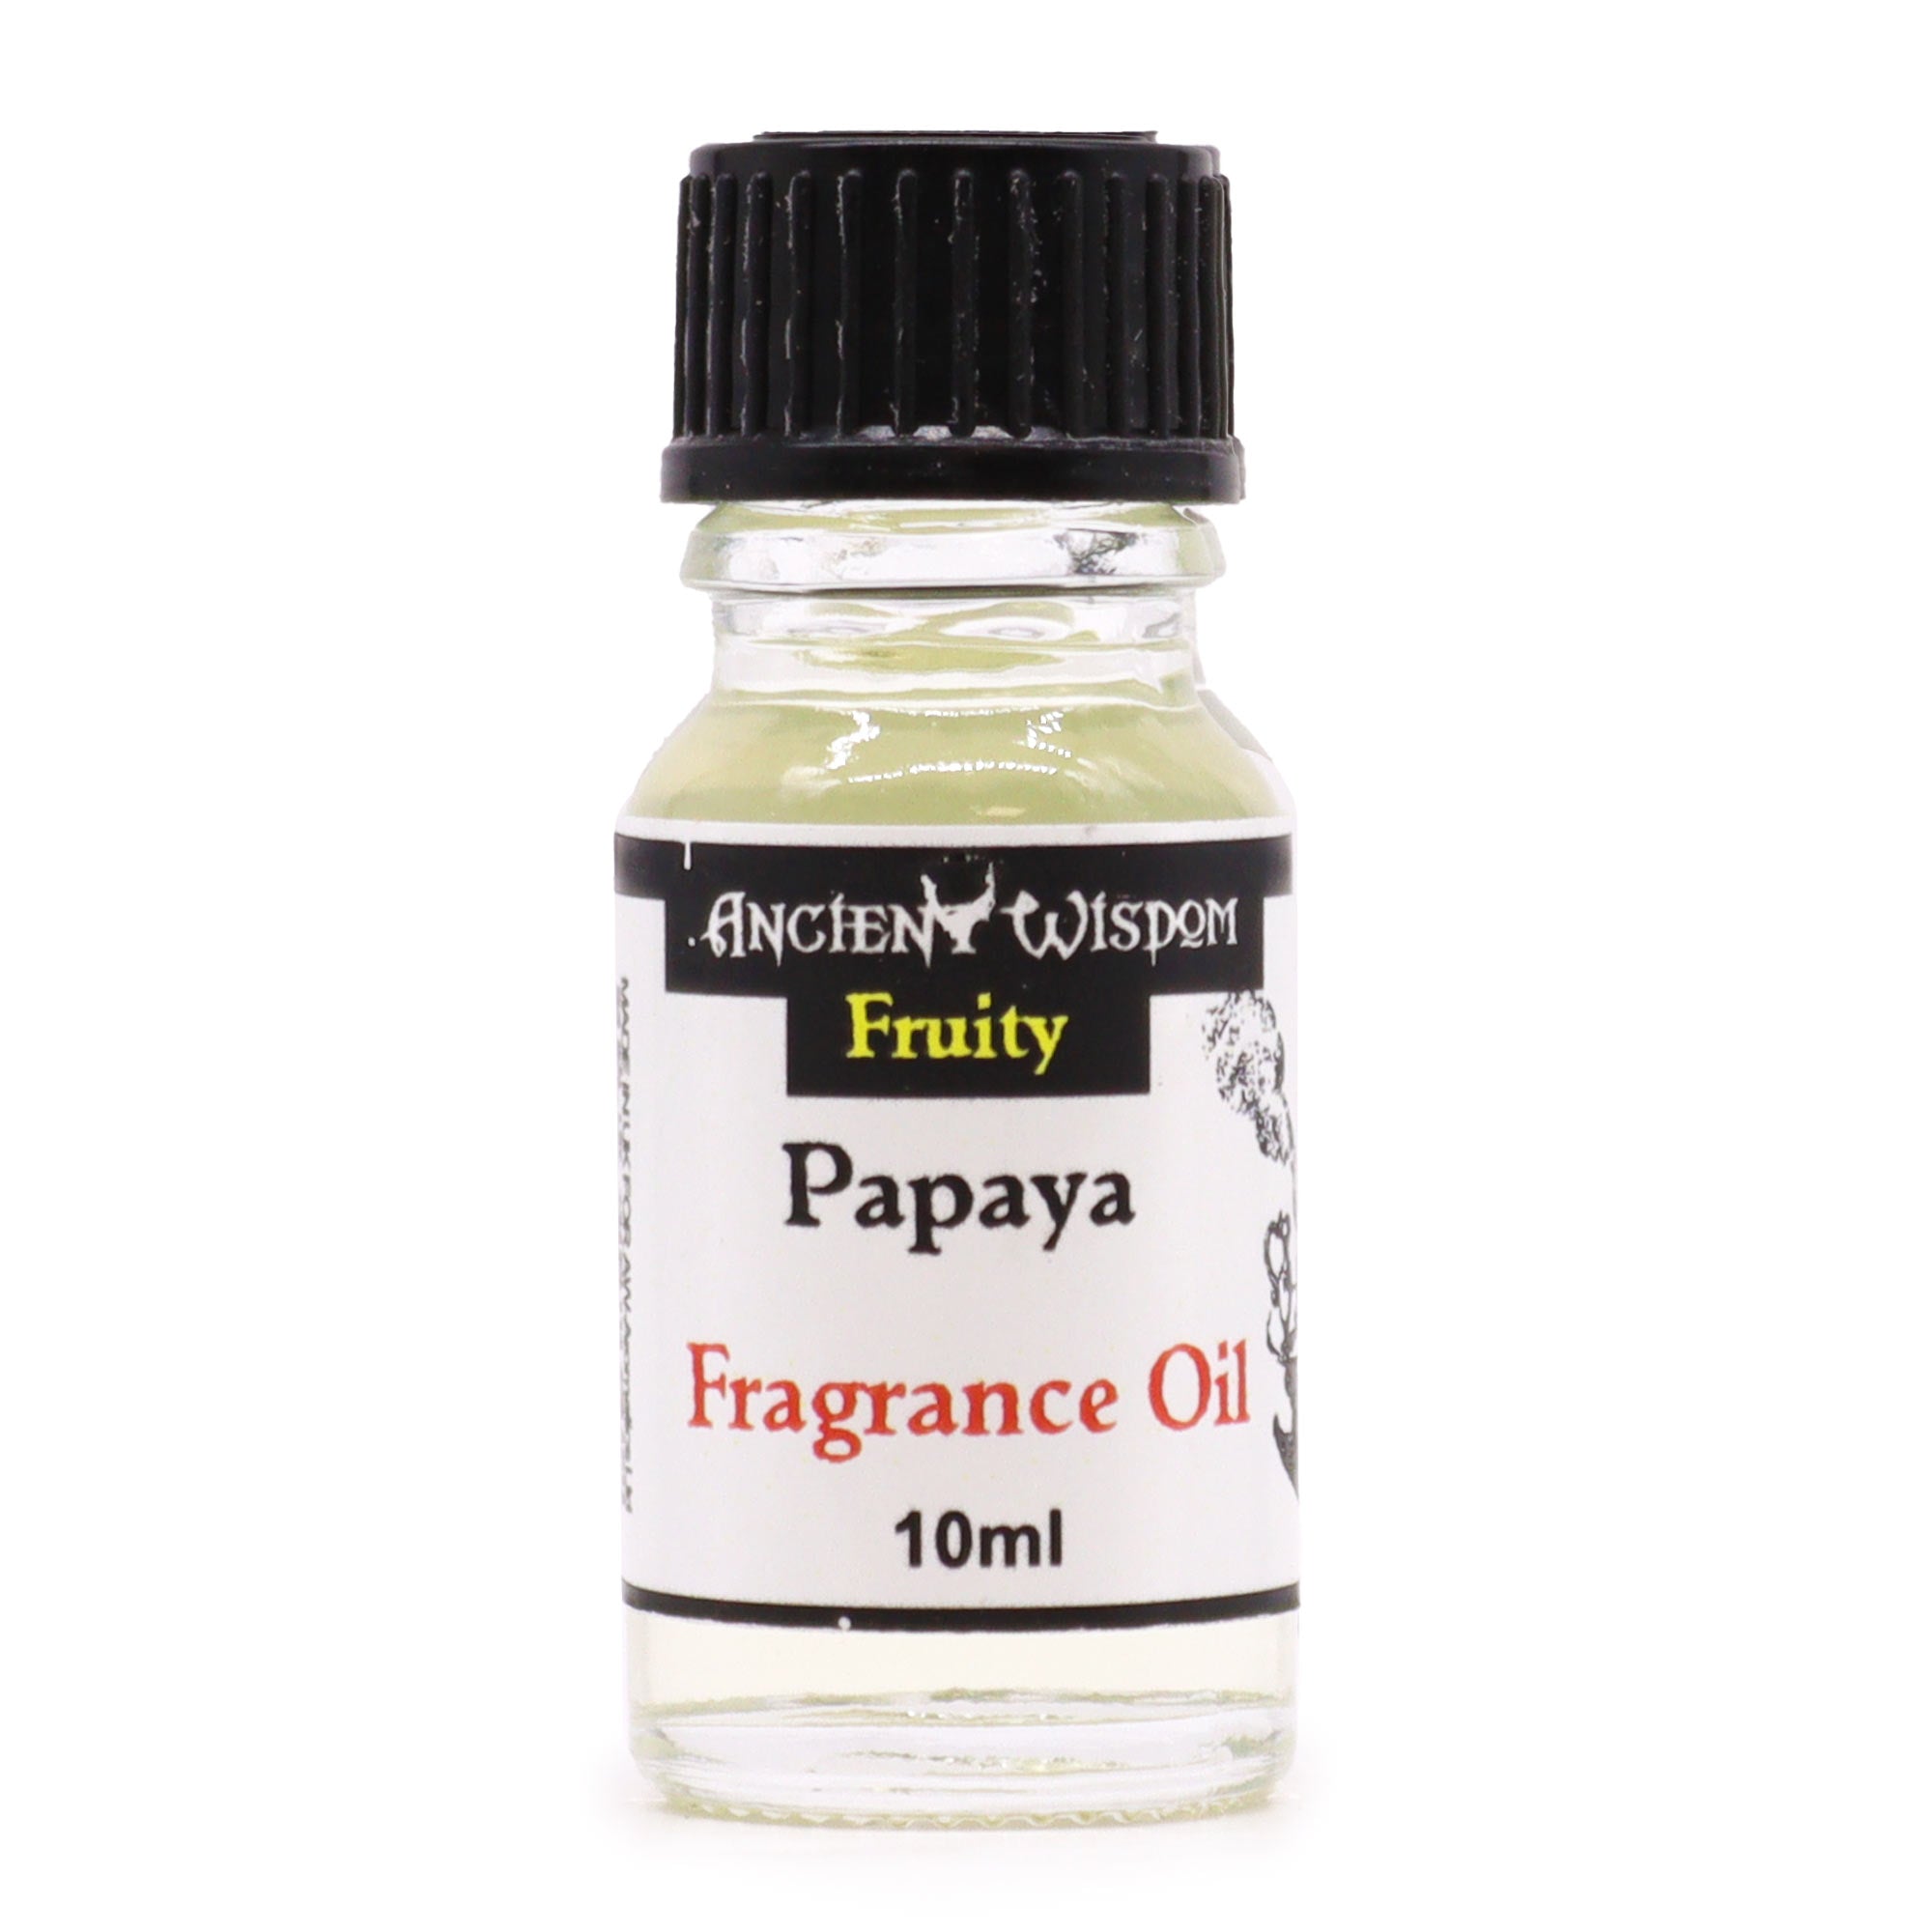 View Papaya Fragrance Oil 10ml information